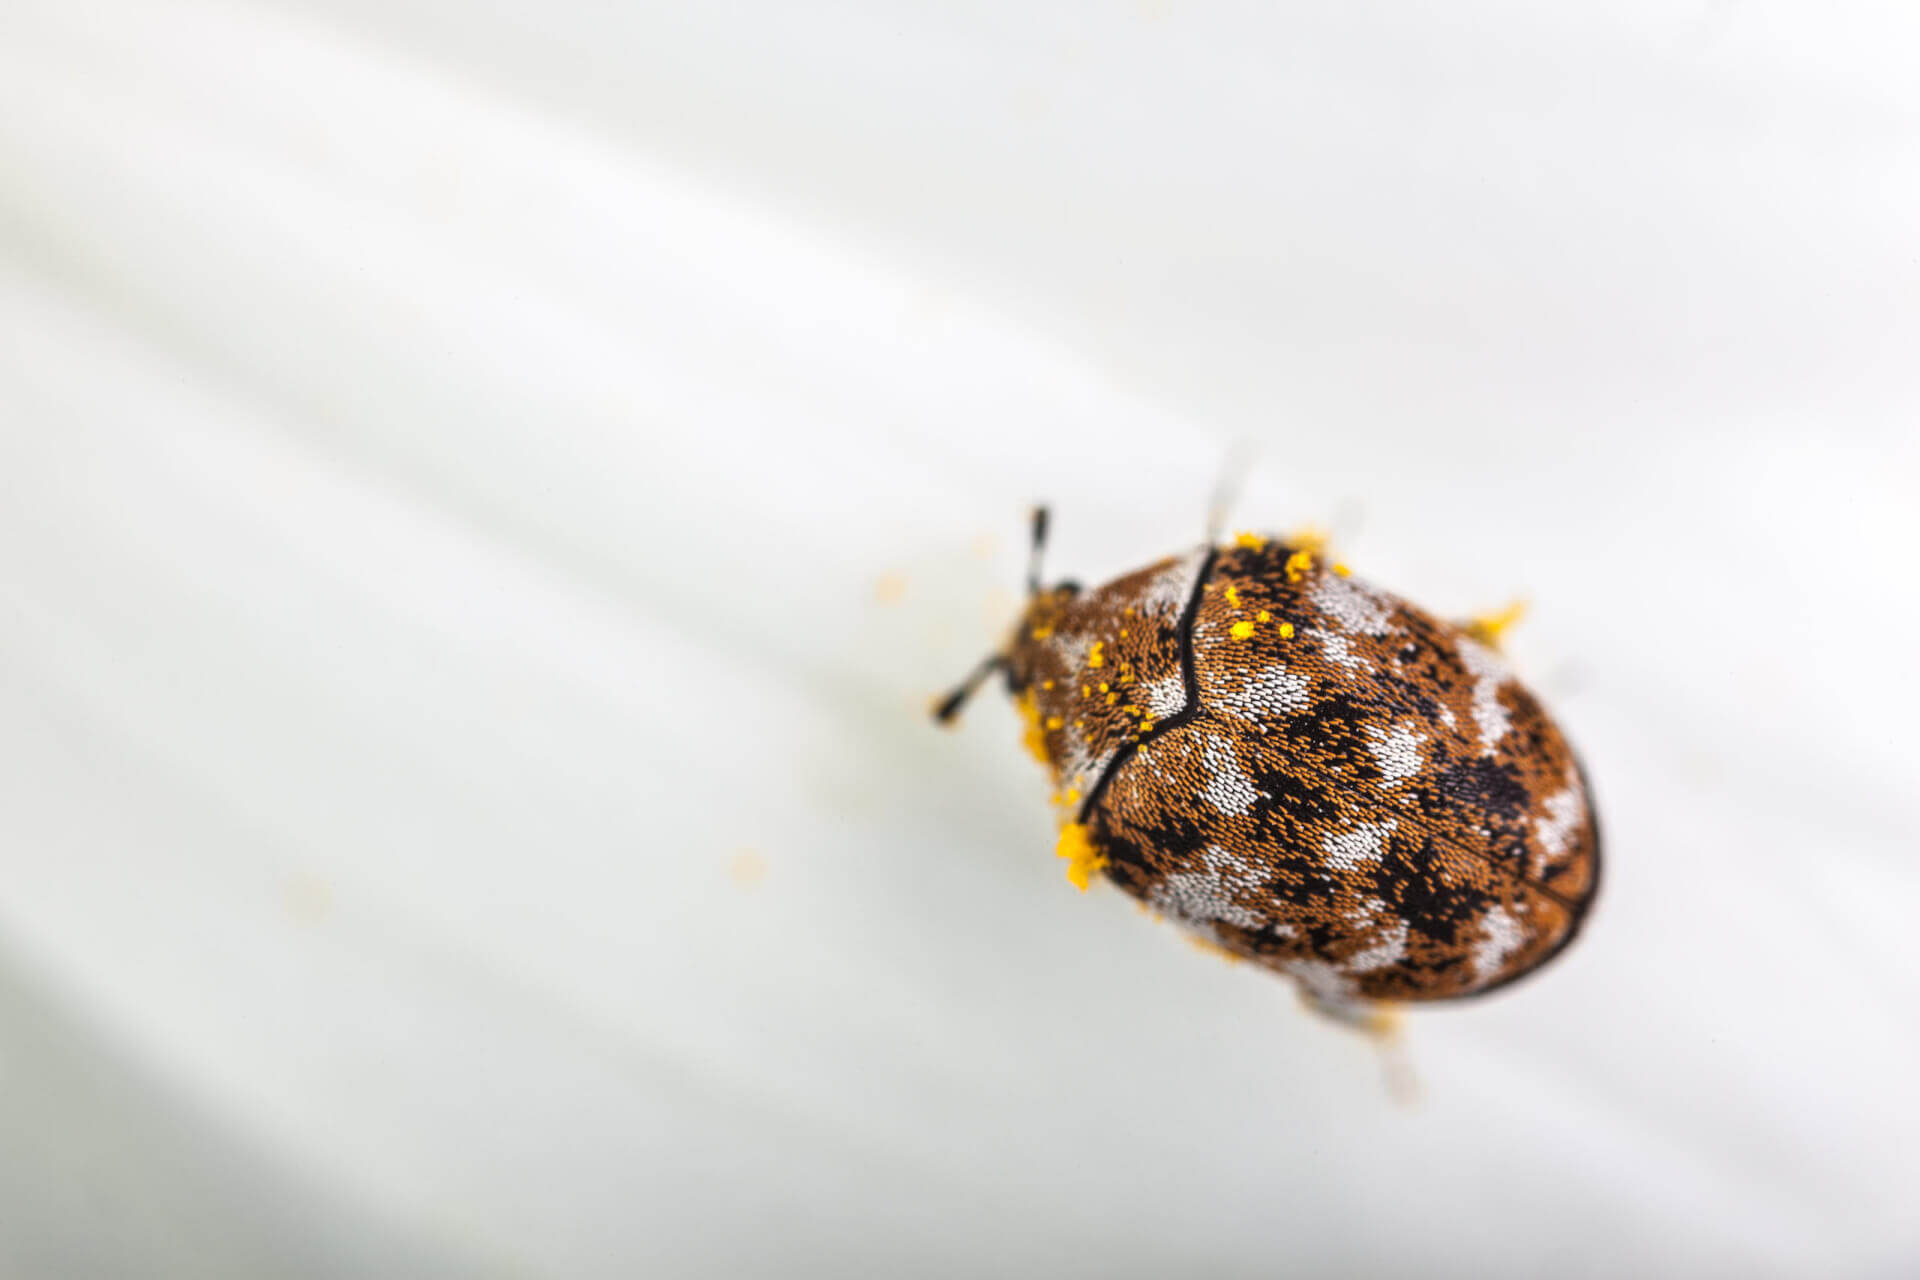 carpet beetle walking across a white surface